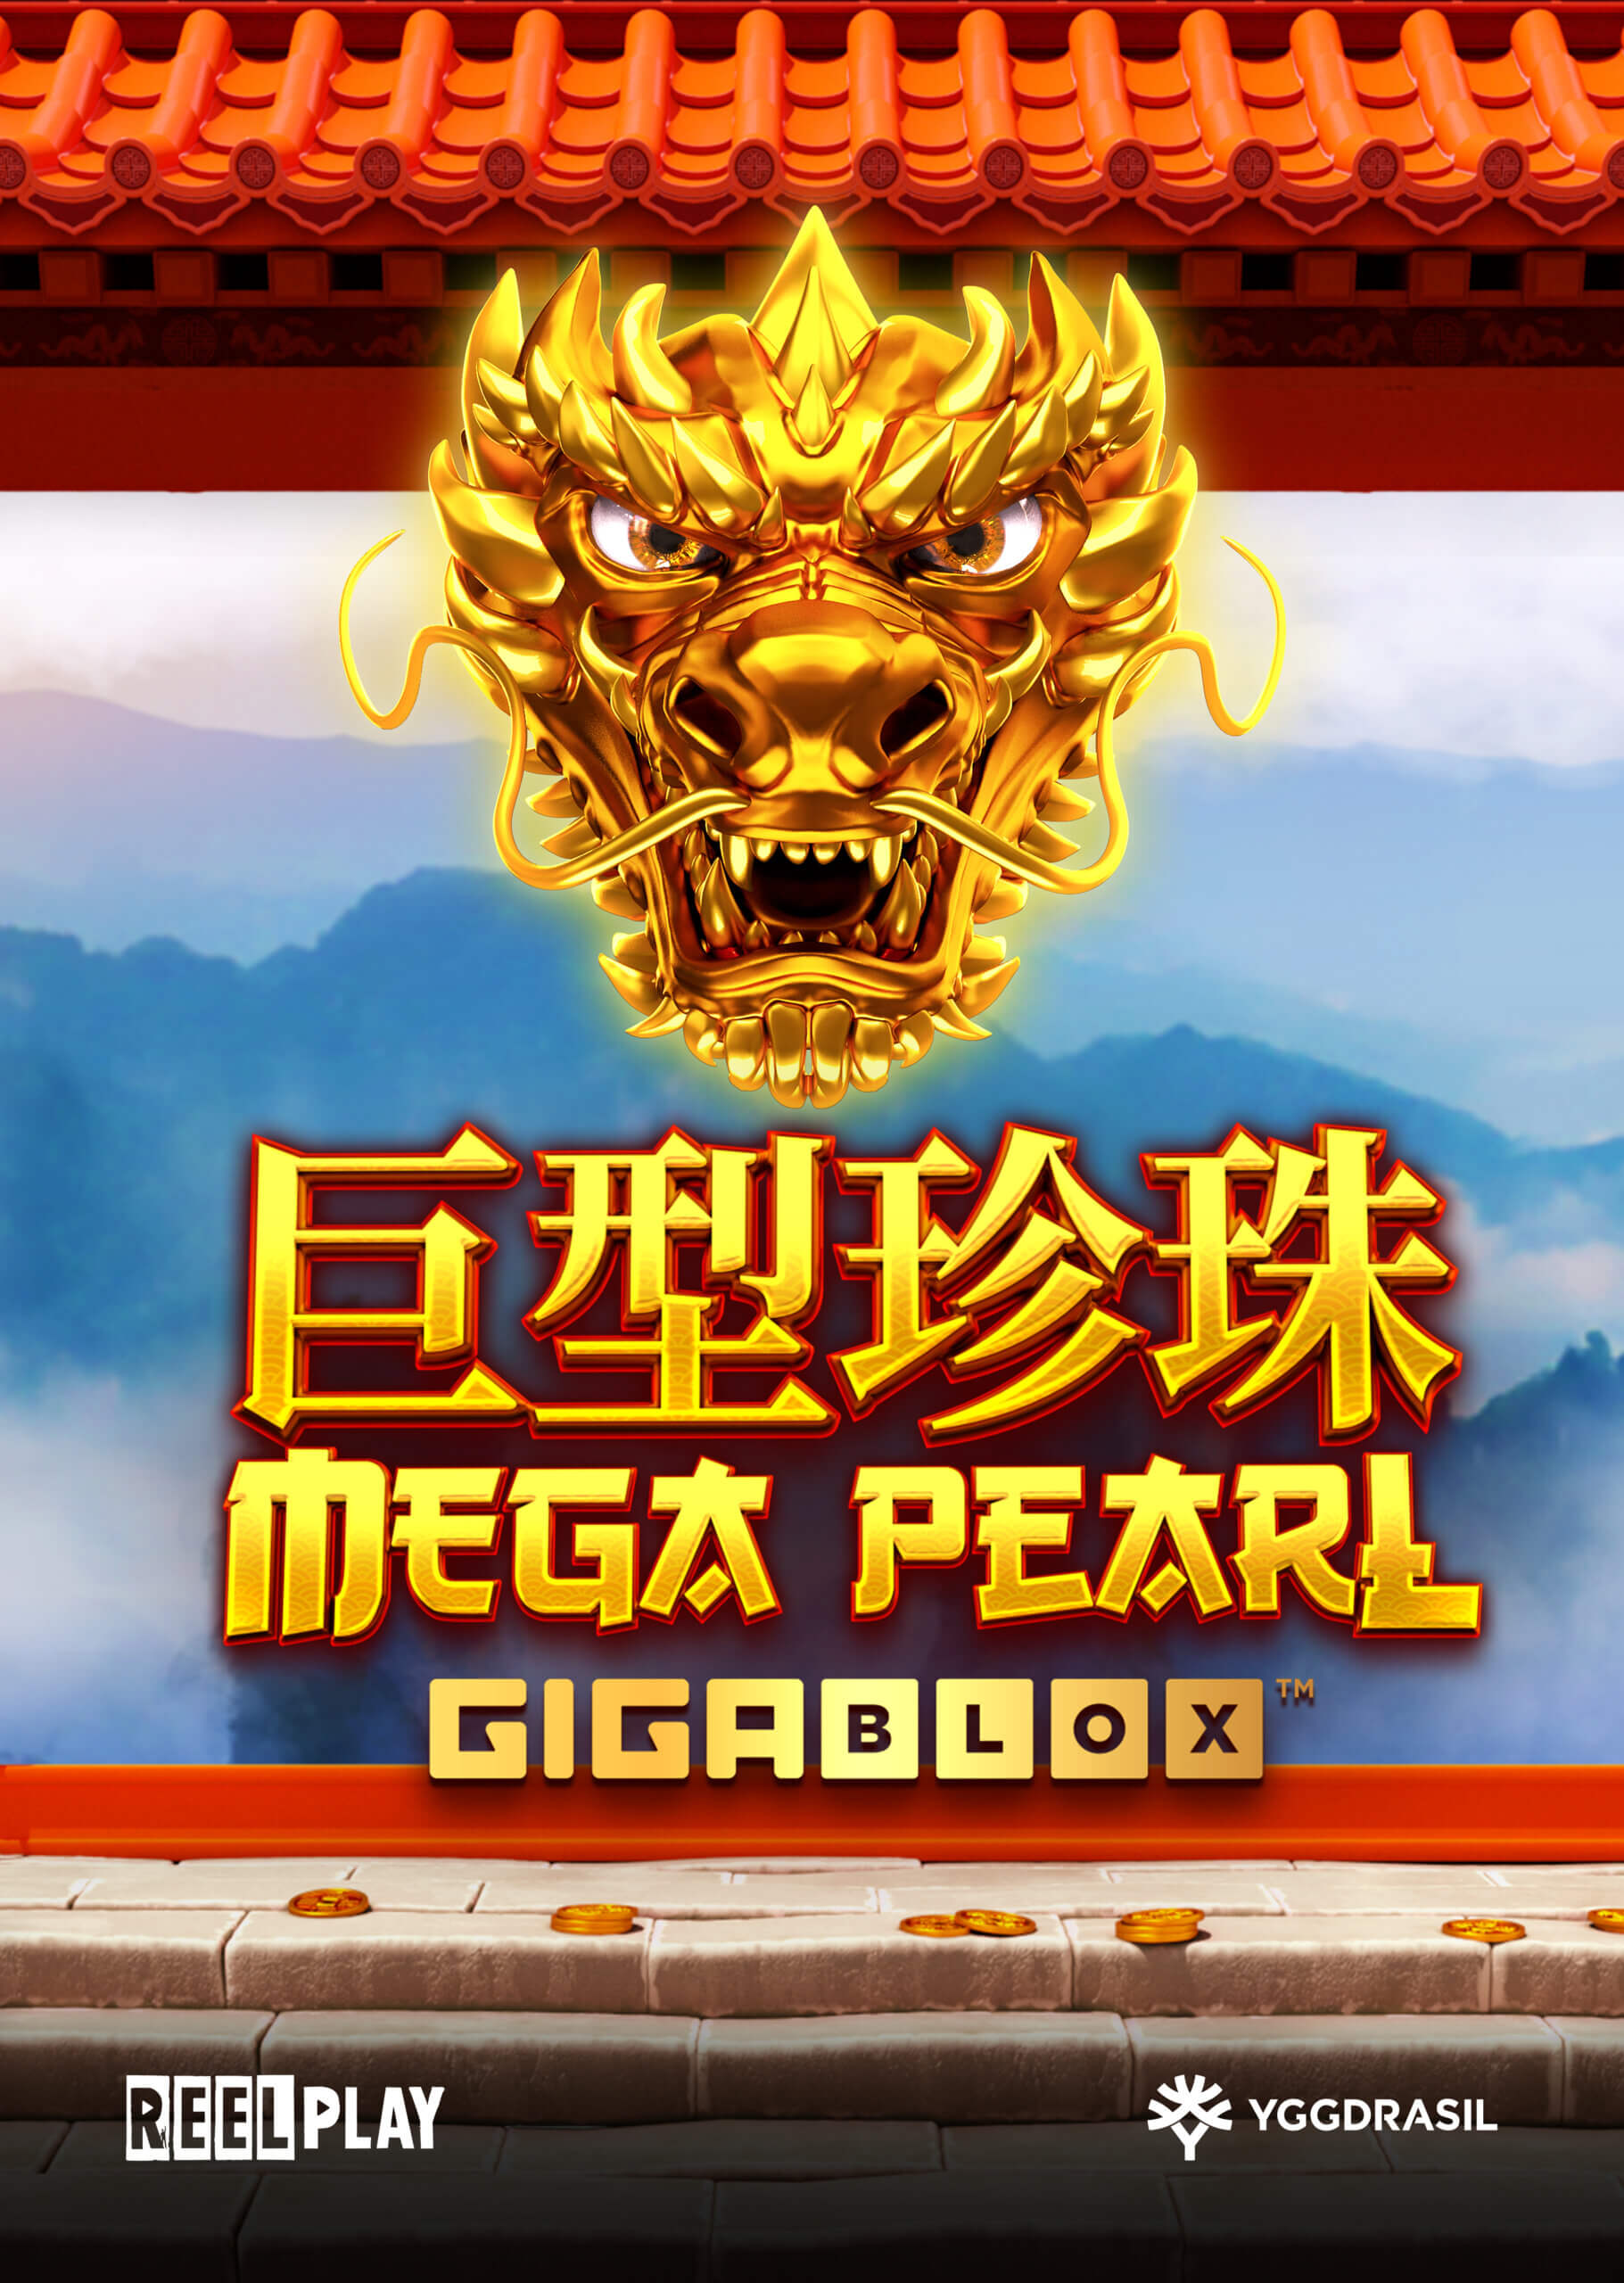 Mega Pearl Gigablox slot